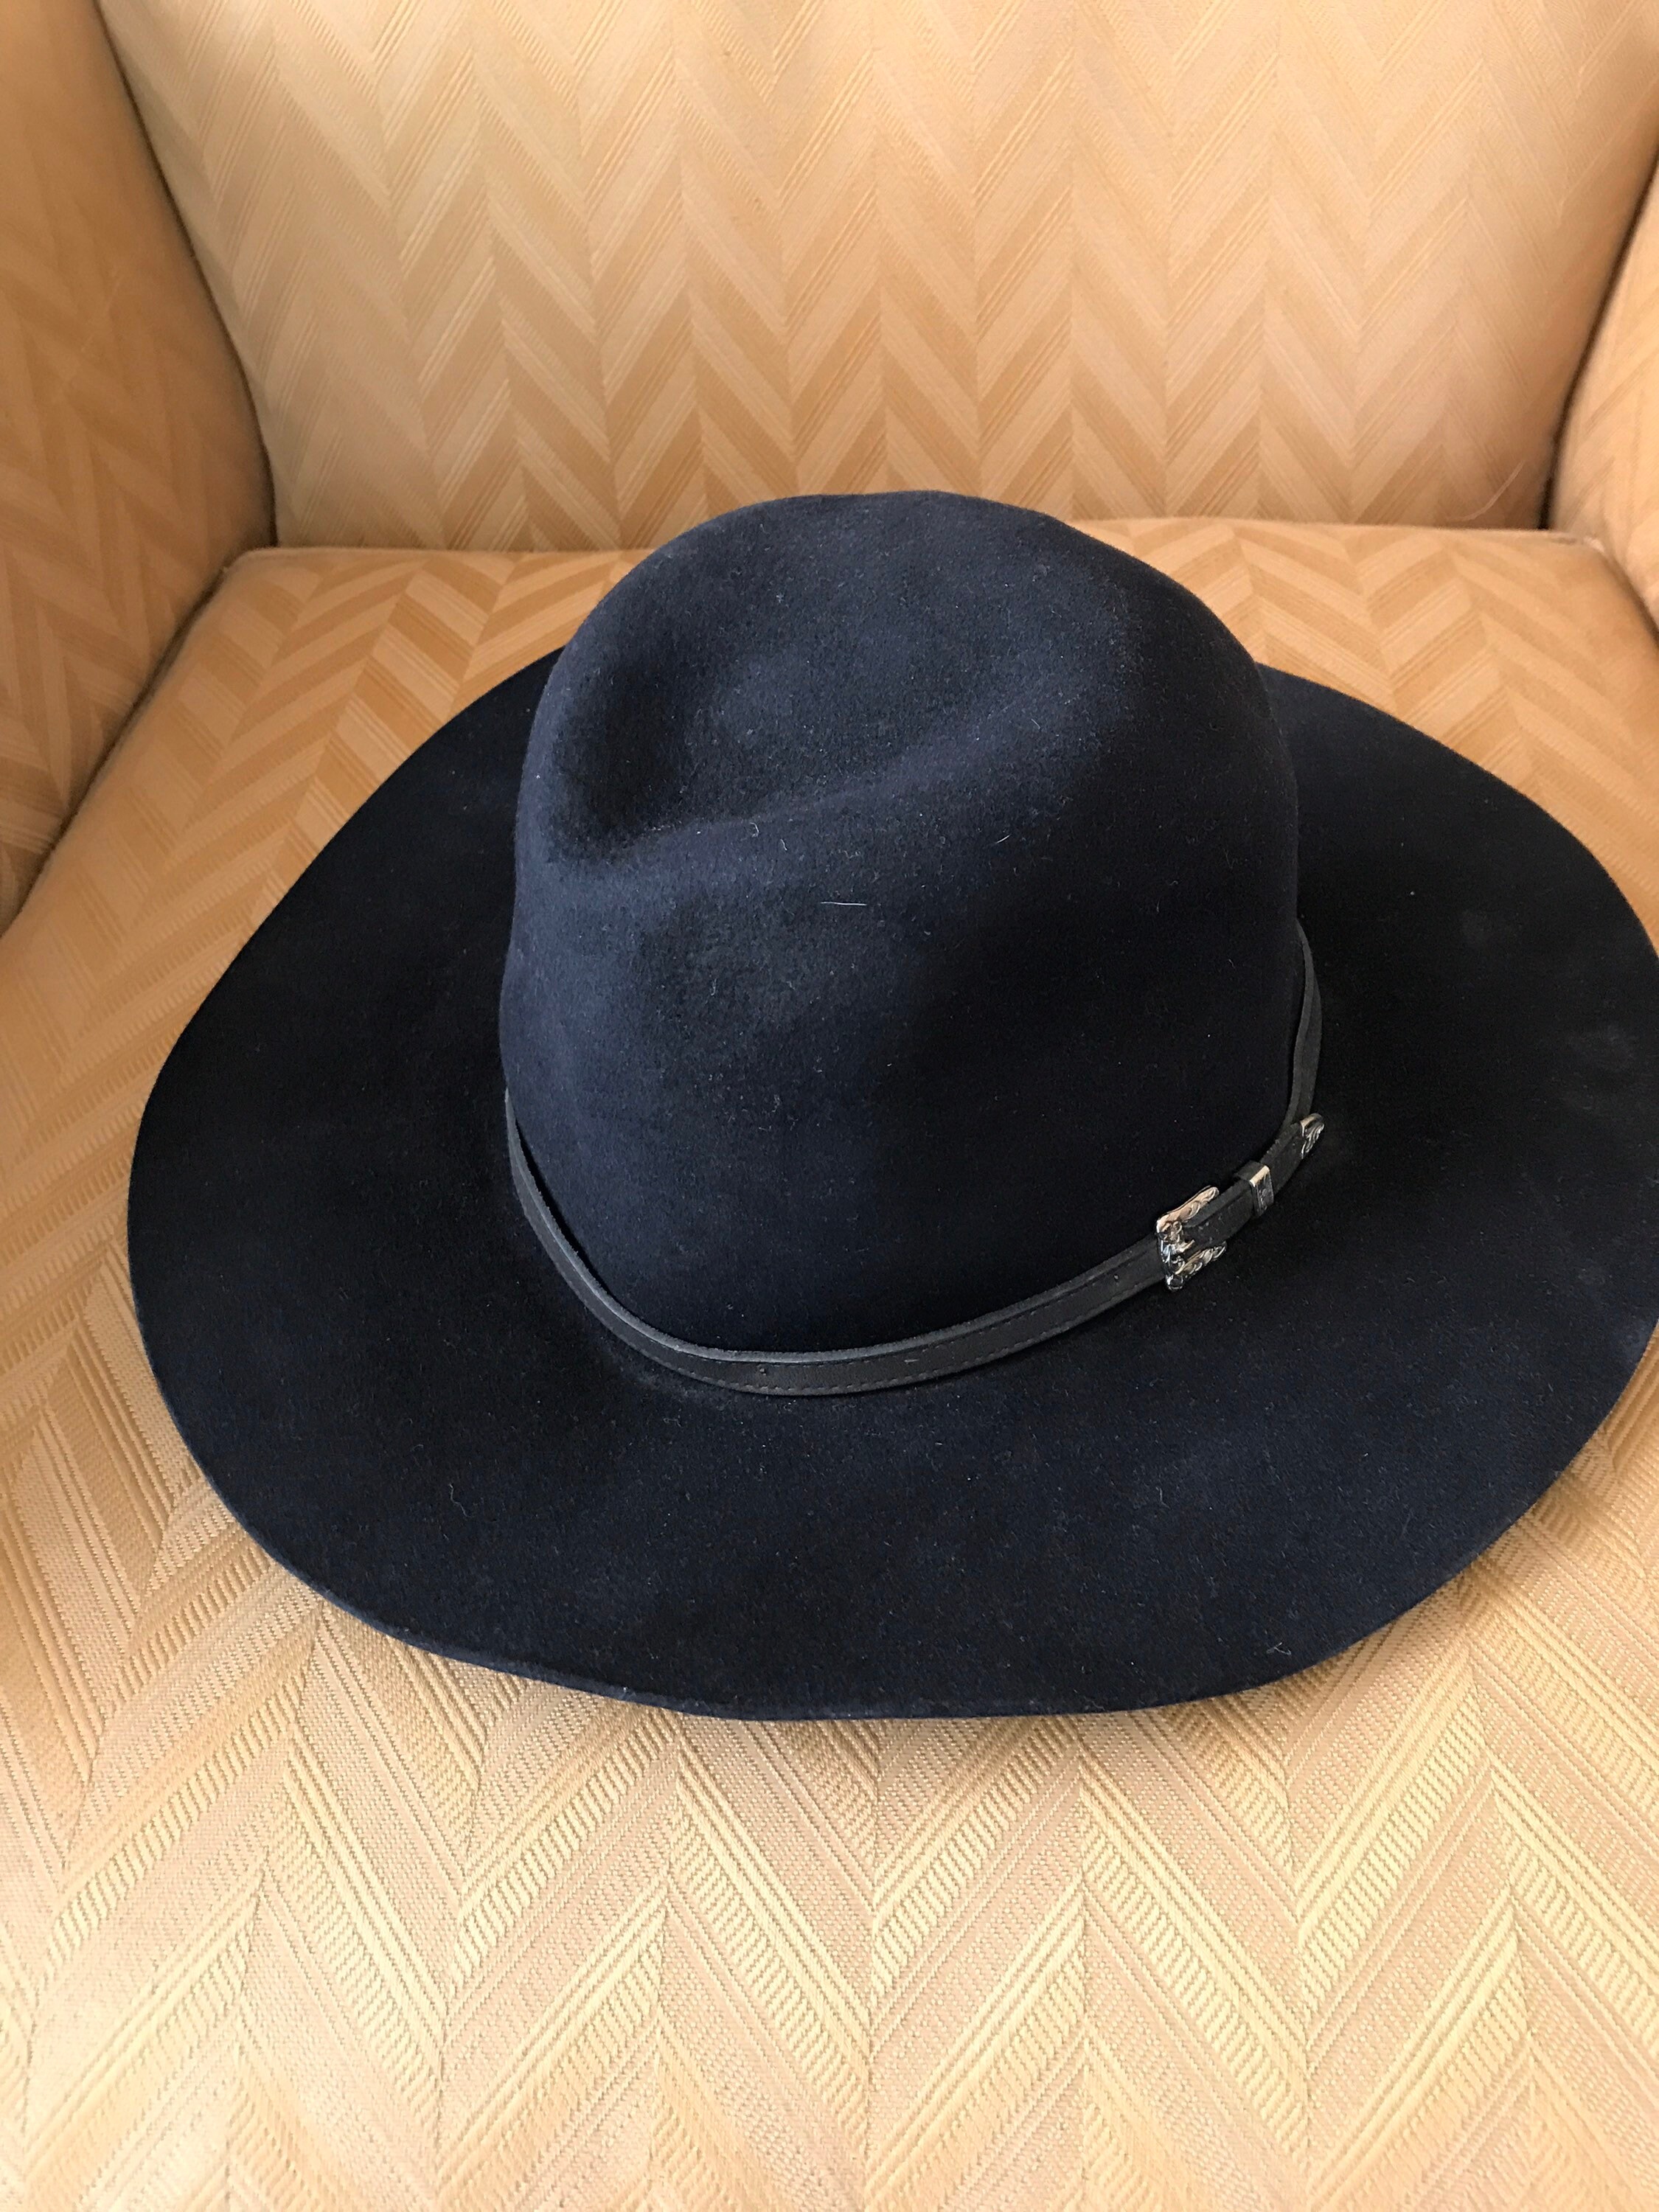 Wrangler cowboy hat | Etsy